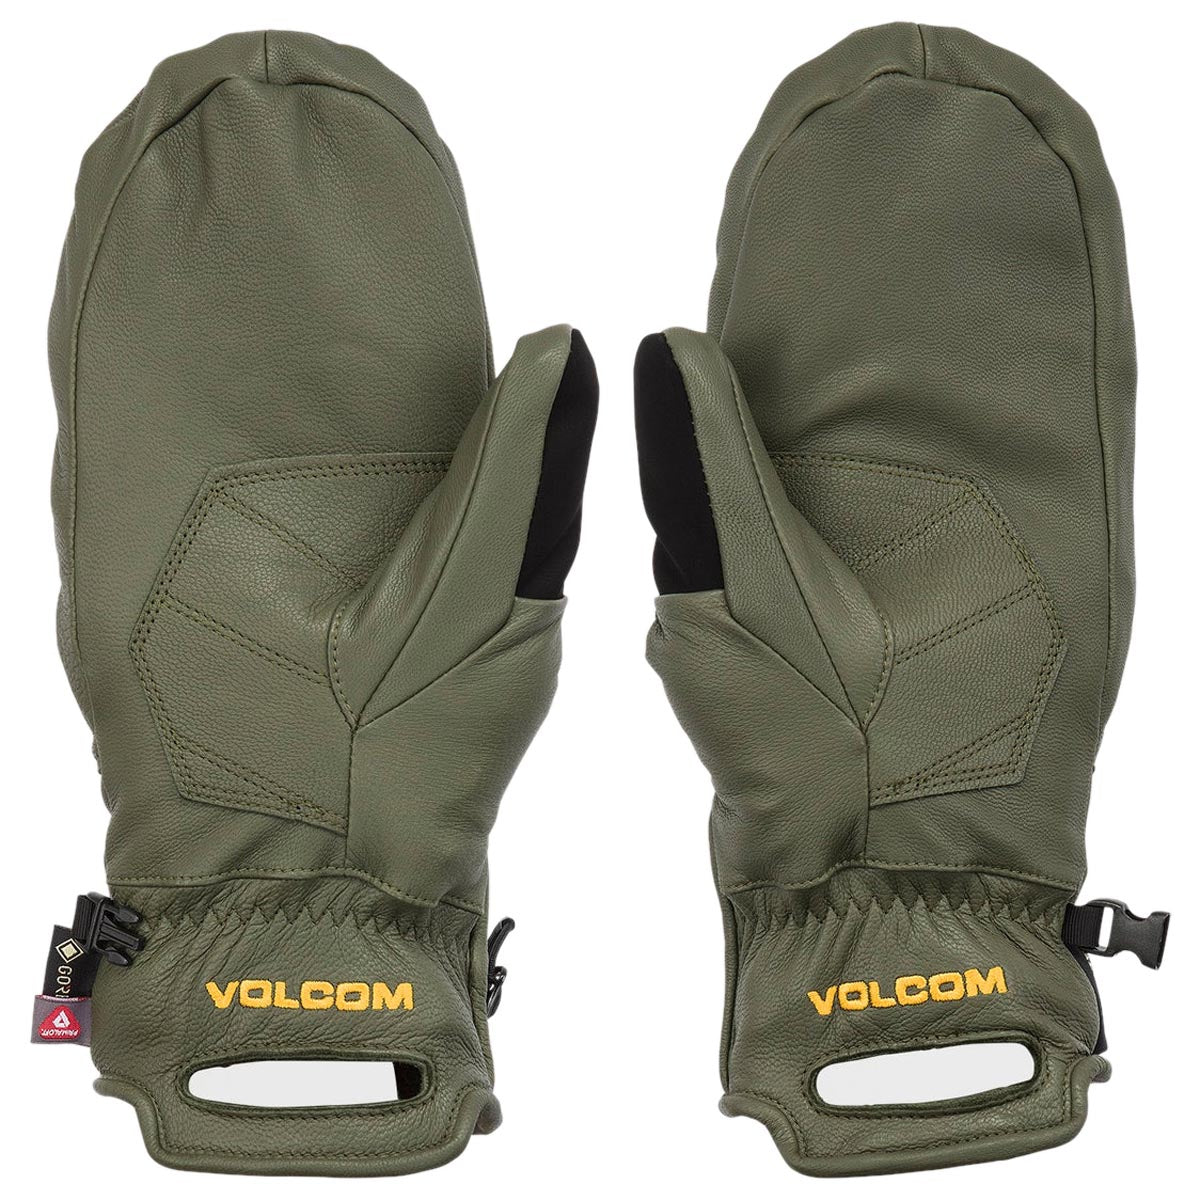 Volcom Service Gore-tex Mitt Snowboard Gloves - Military image 2